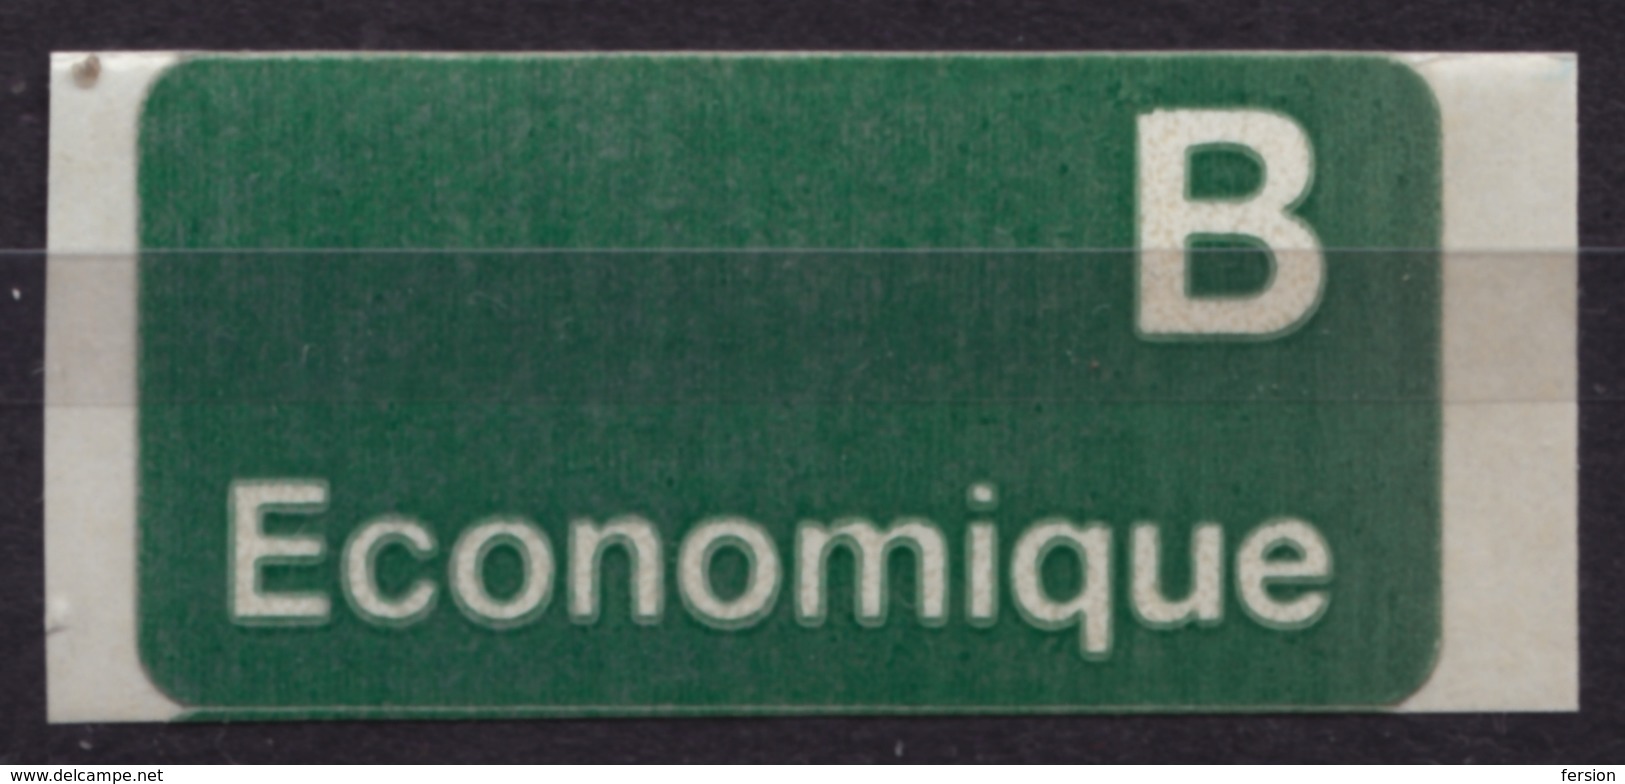 B Economique Vignette Label SEWDEN SVERIGE Self Adhesive Not Used - Machine Labels [ATM]